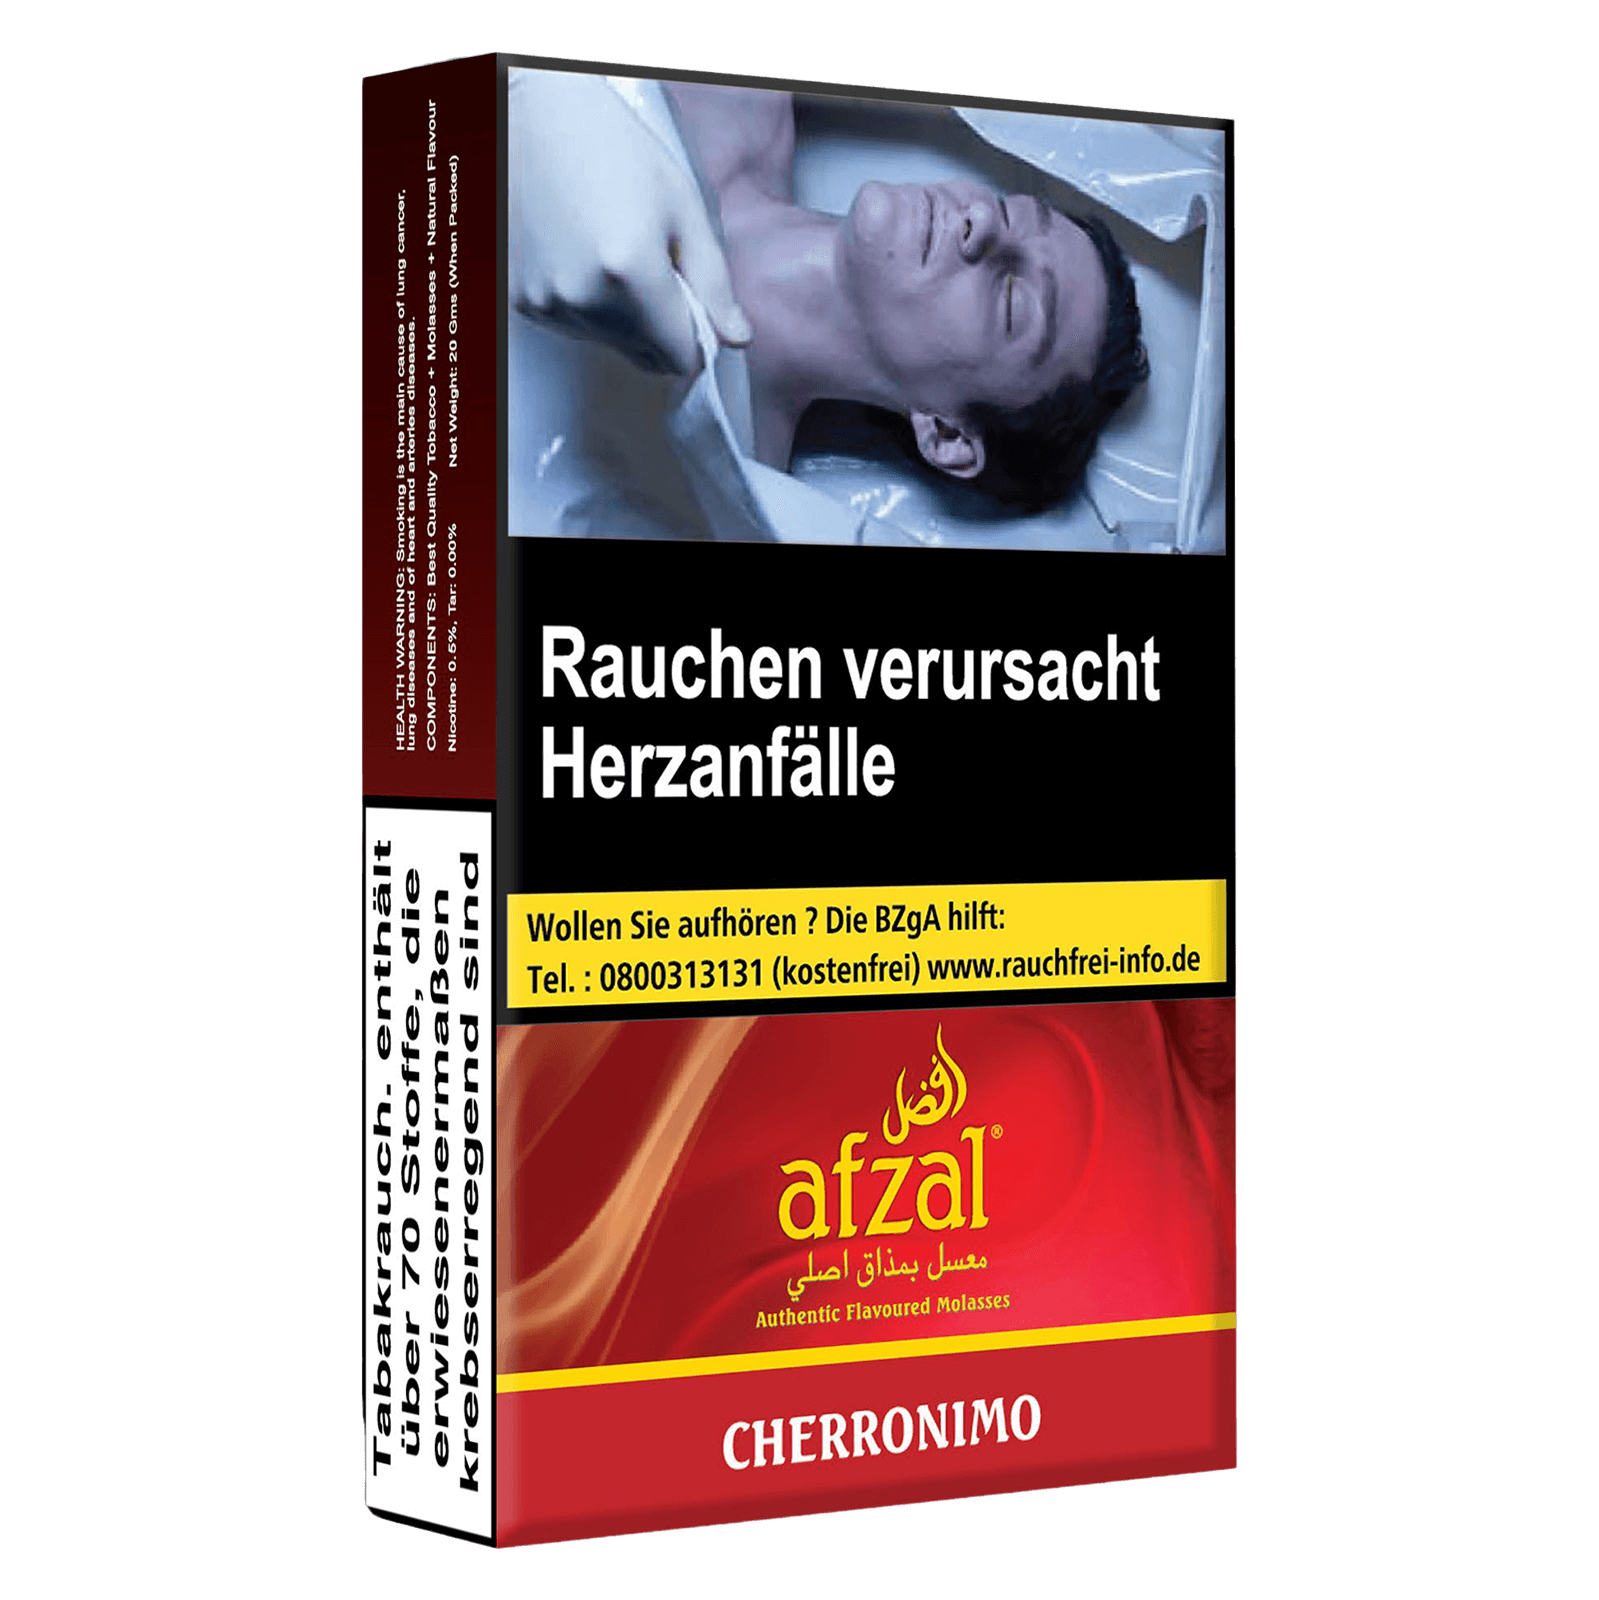 Afzal 20g - Cherronimo